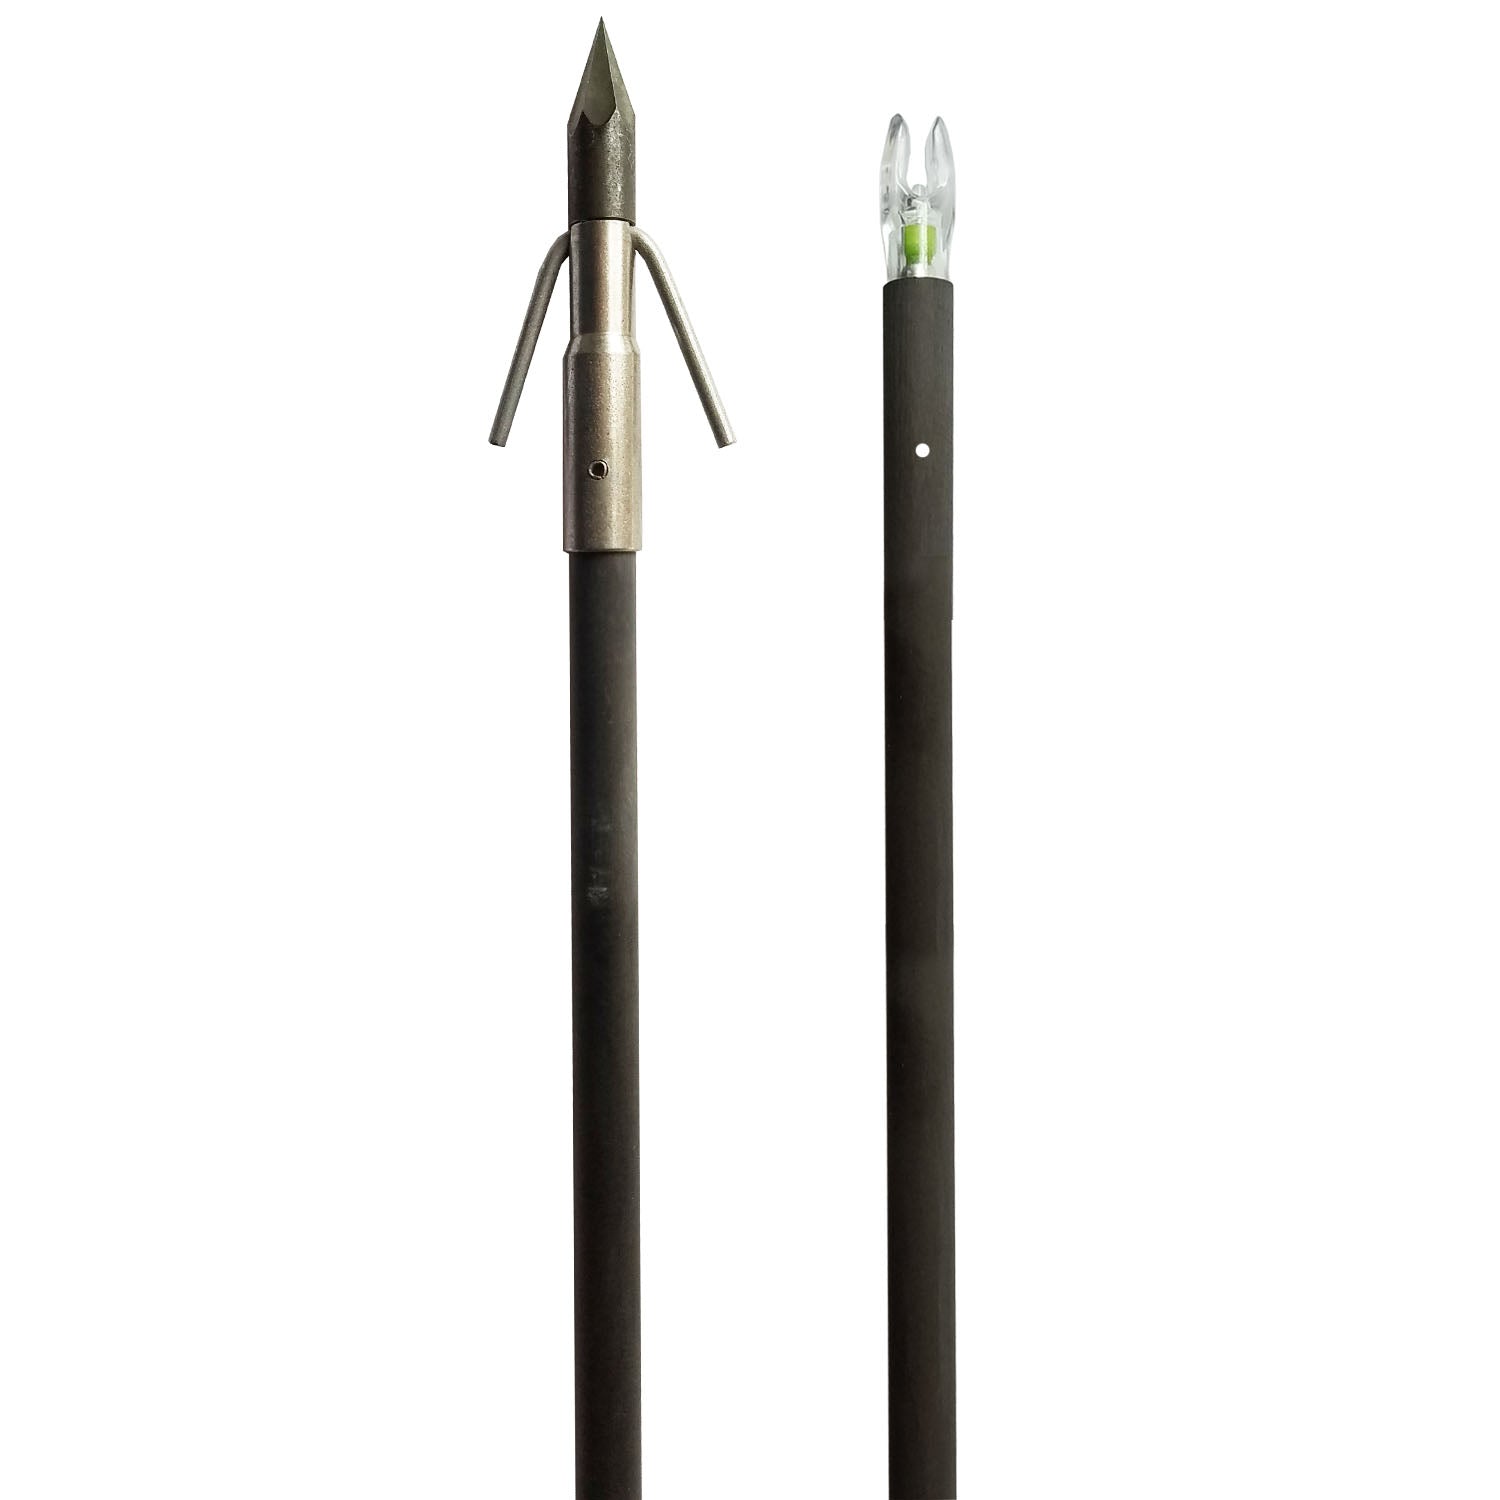 Muzzy Bowfishing Arrow Lighted Carbon Composite Arrow with Carp Point